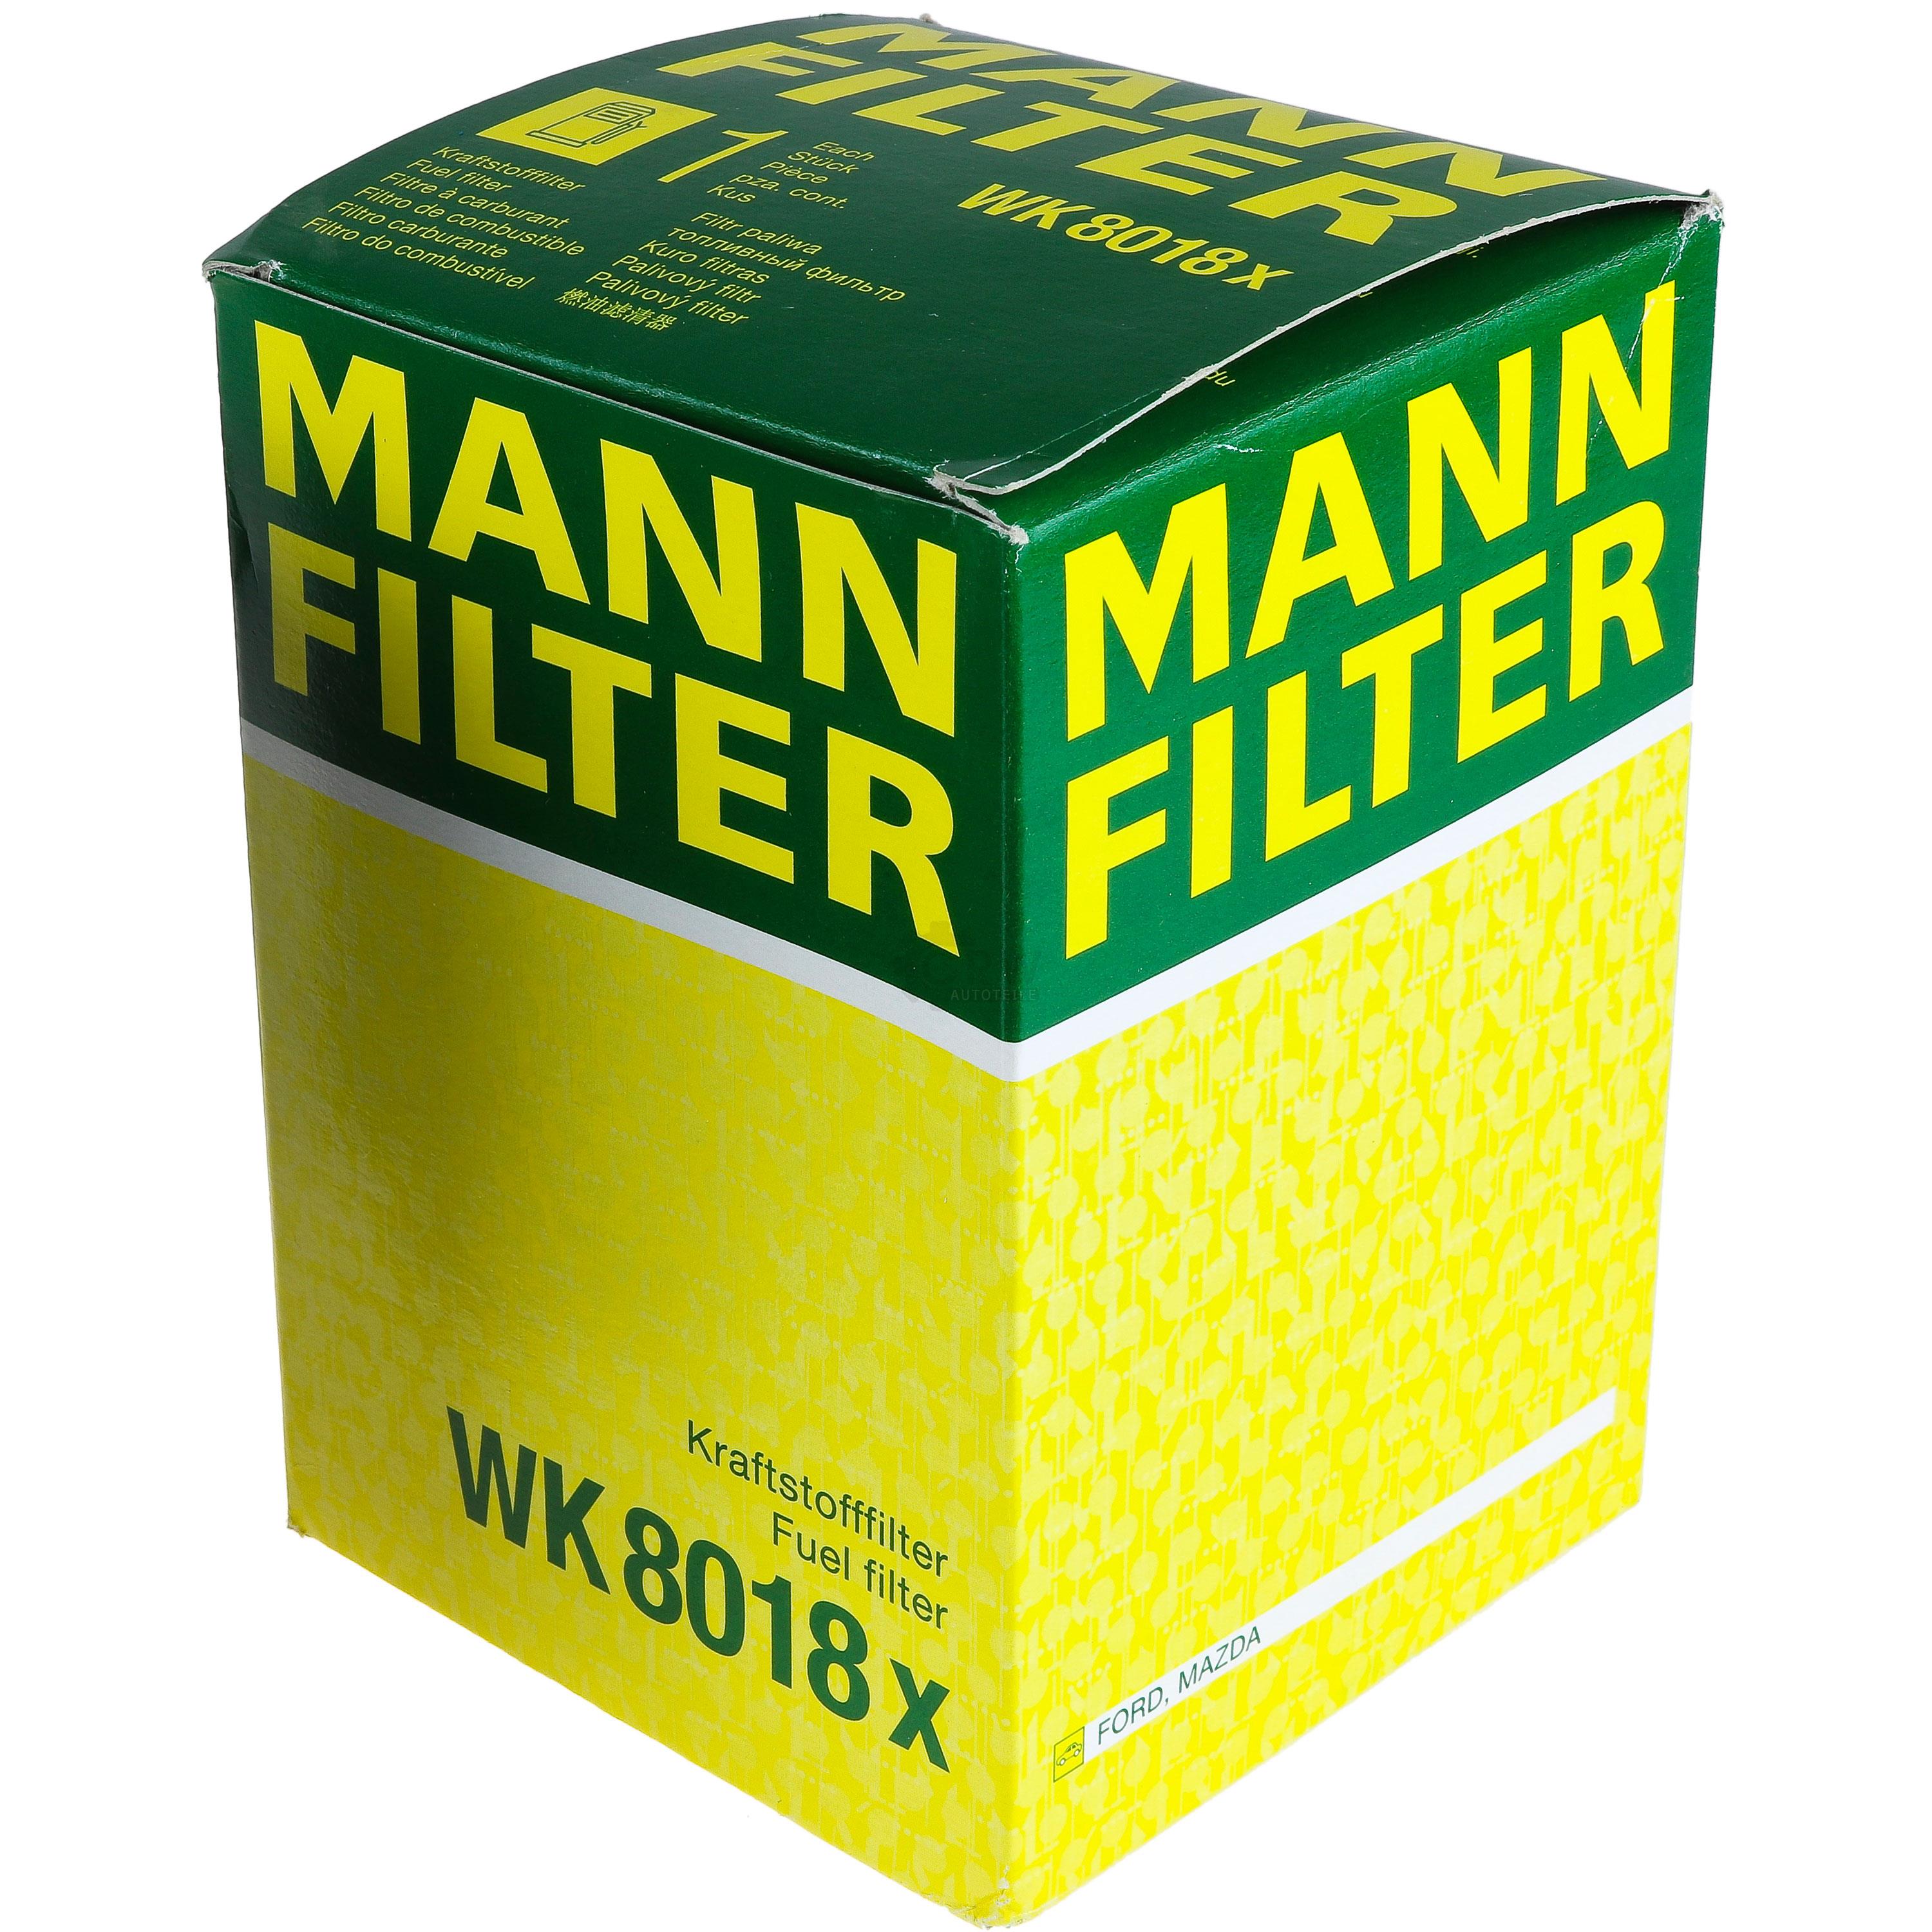 MANN-FILTER Kraftstofffilter WK 8018 x Fuel Filter